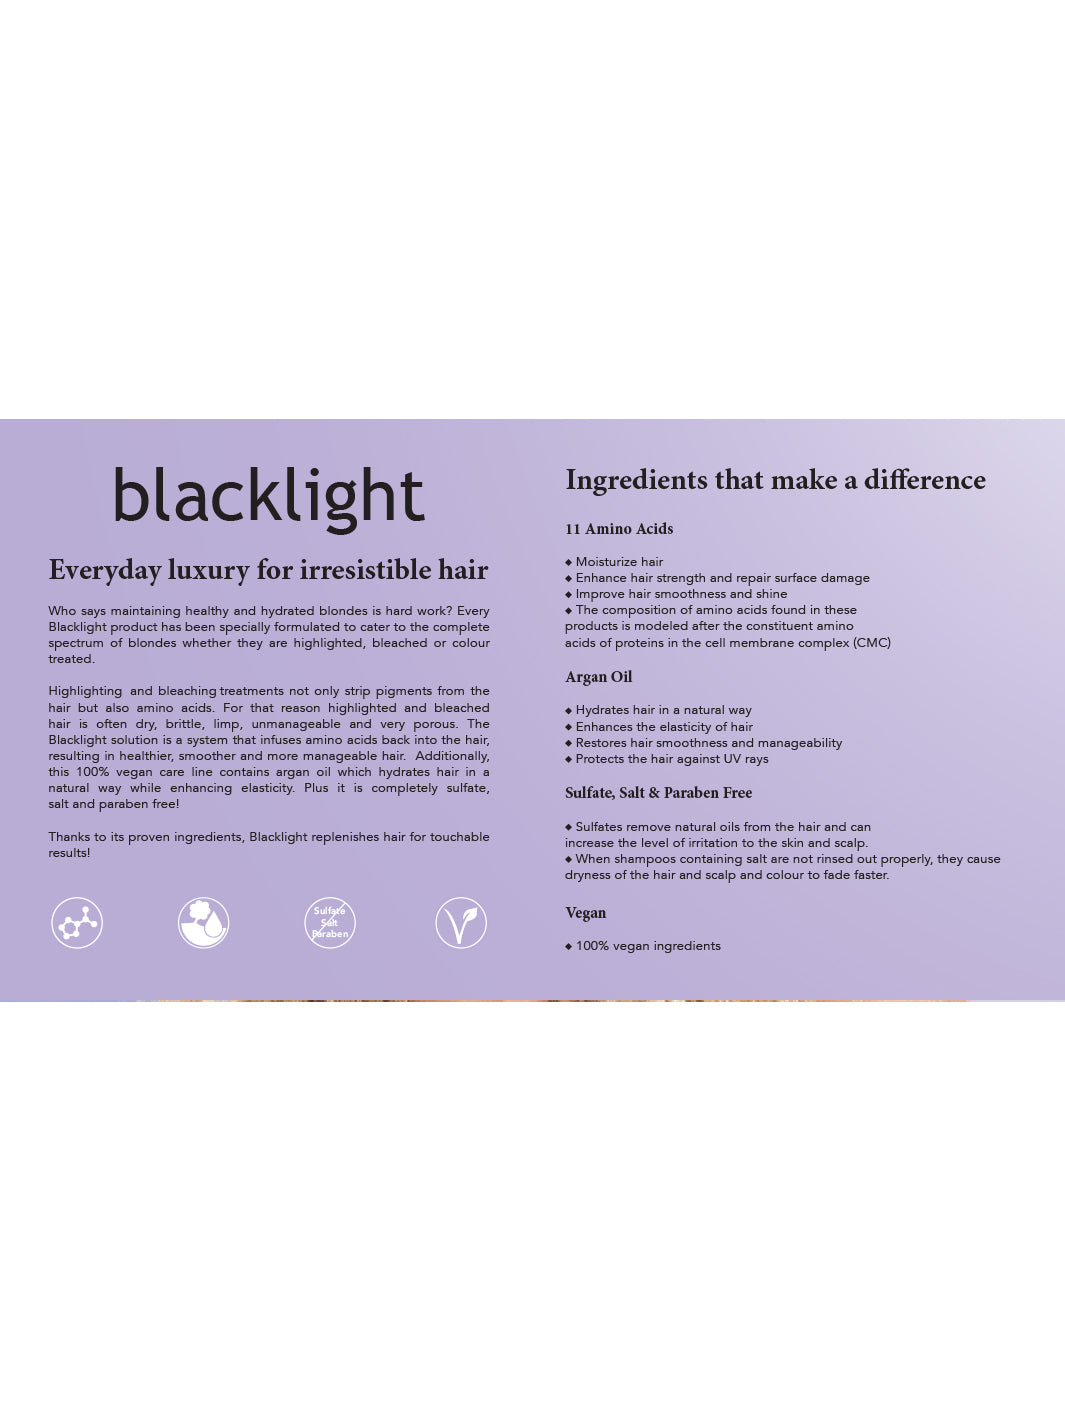 Blacklight Retail Guide (digital copy)